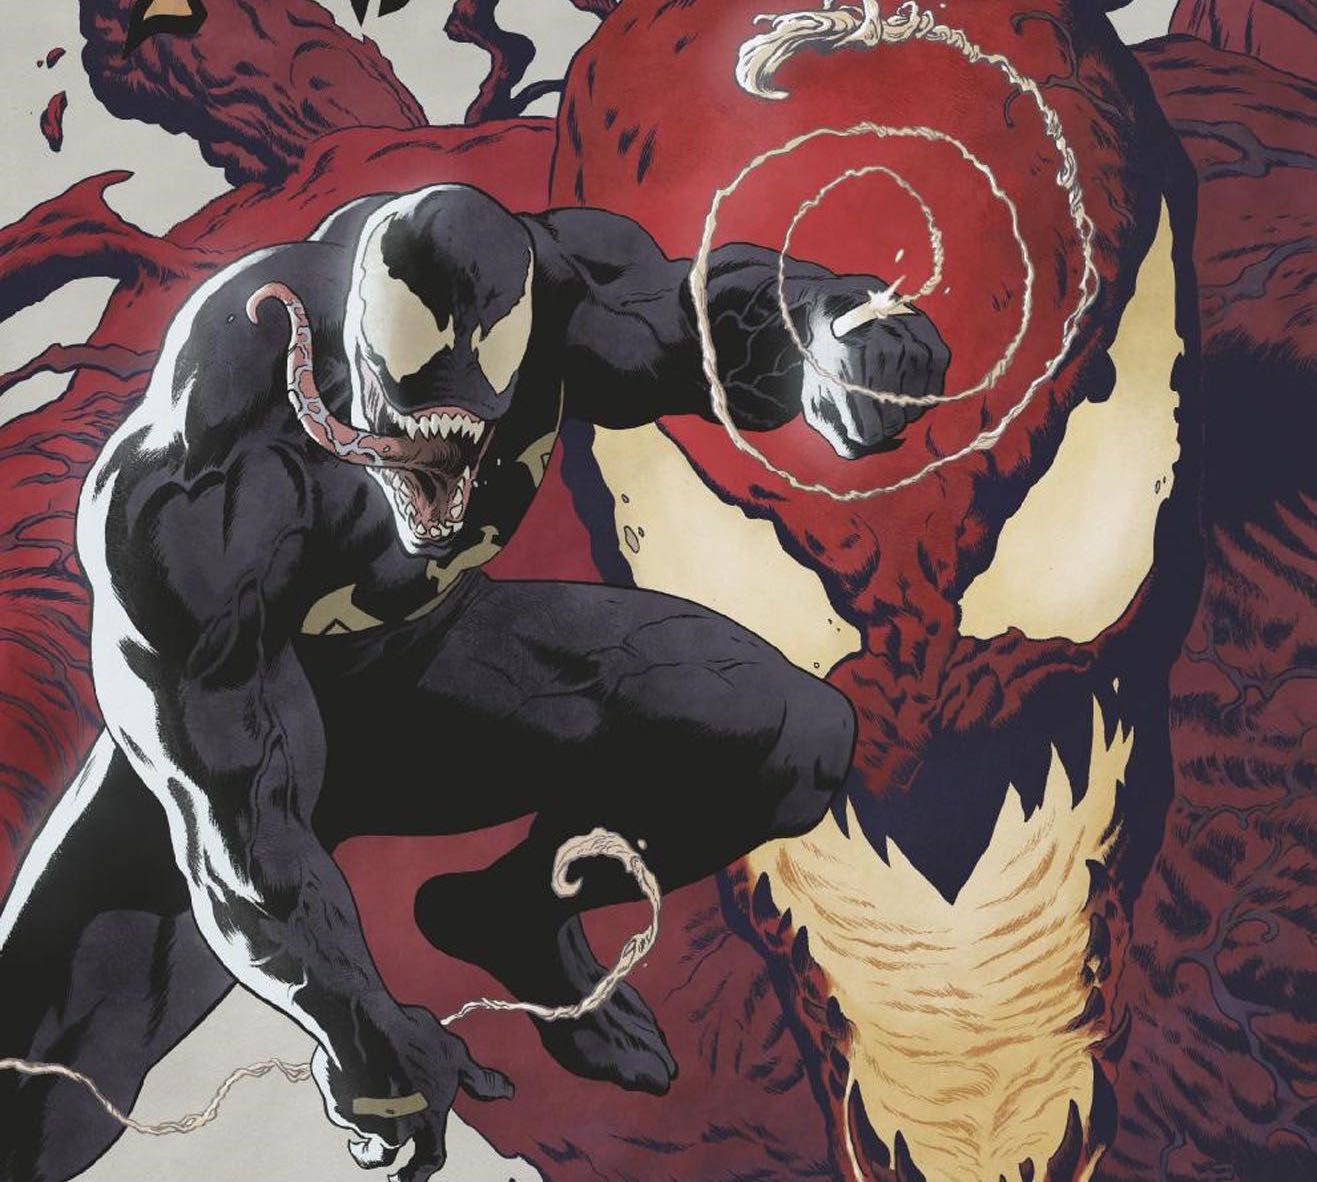 EXCLUSIVE Marvel Preview: Venom #21